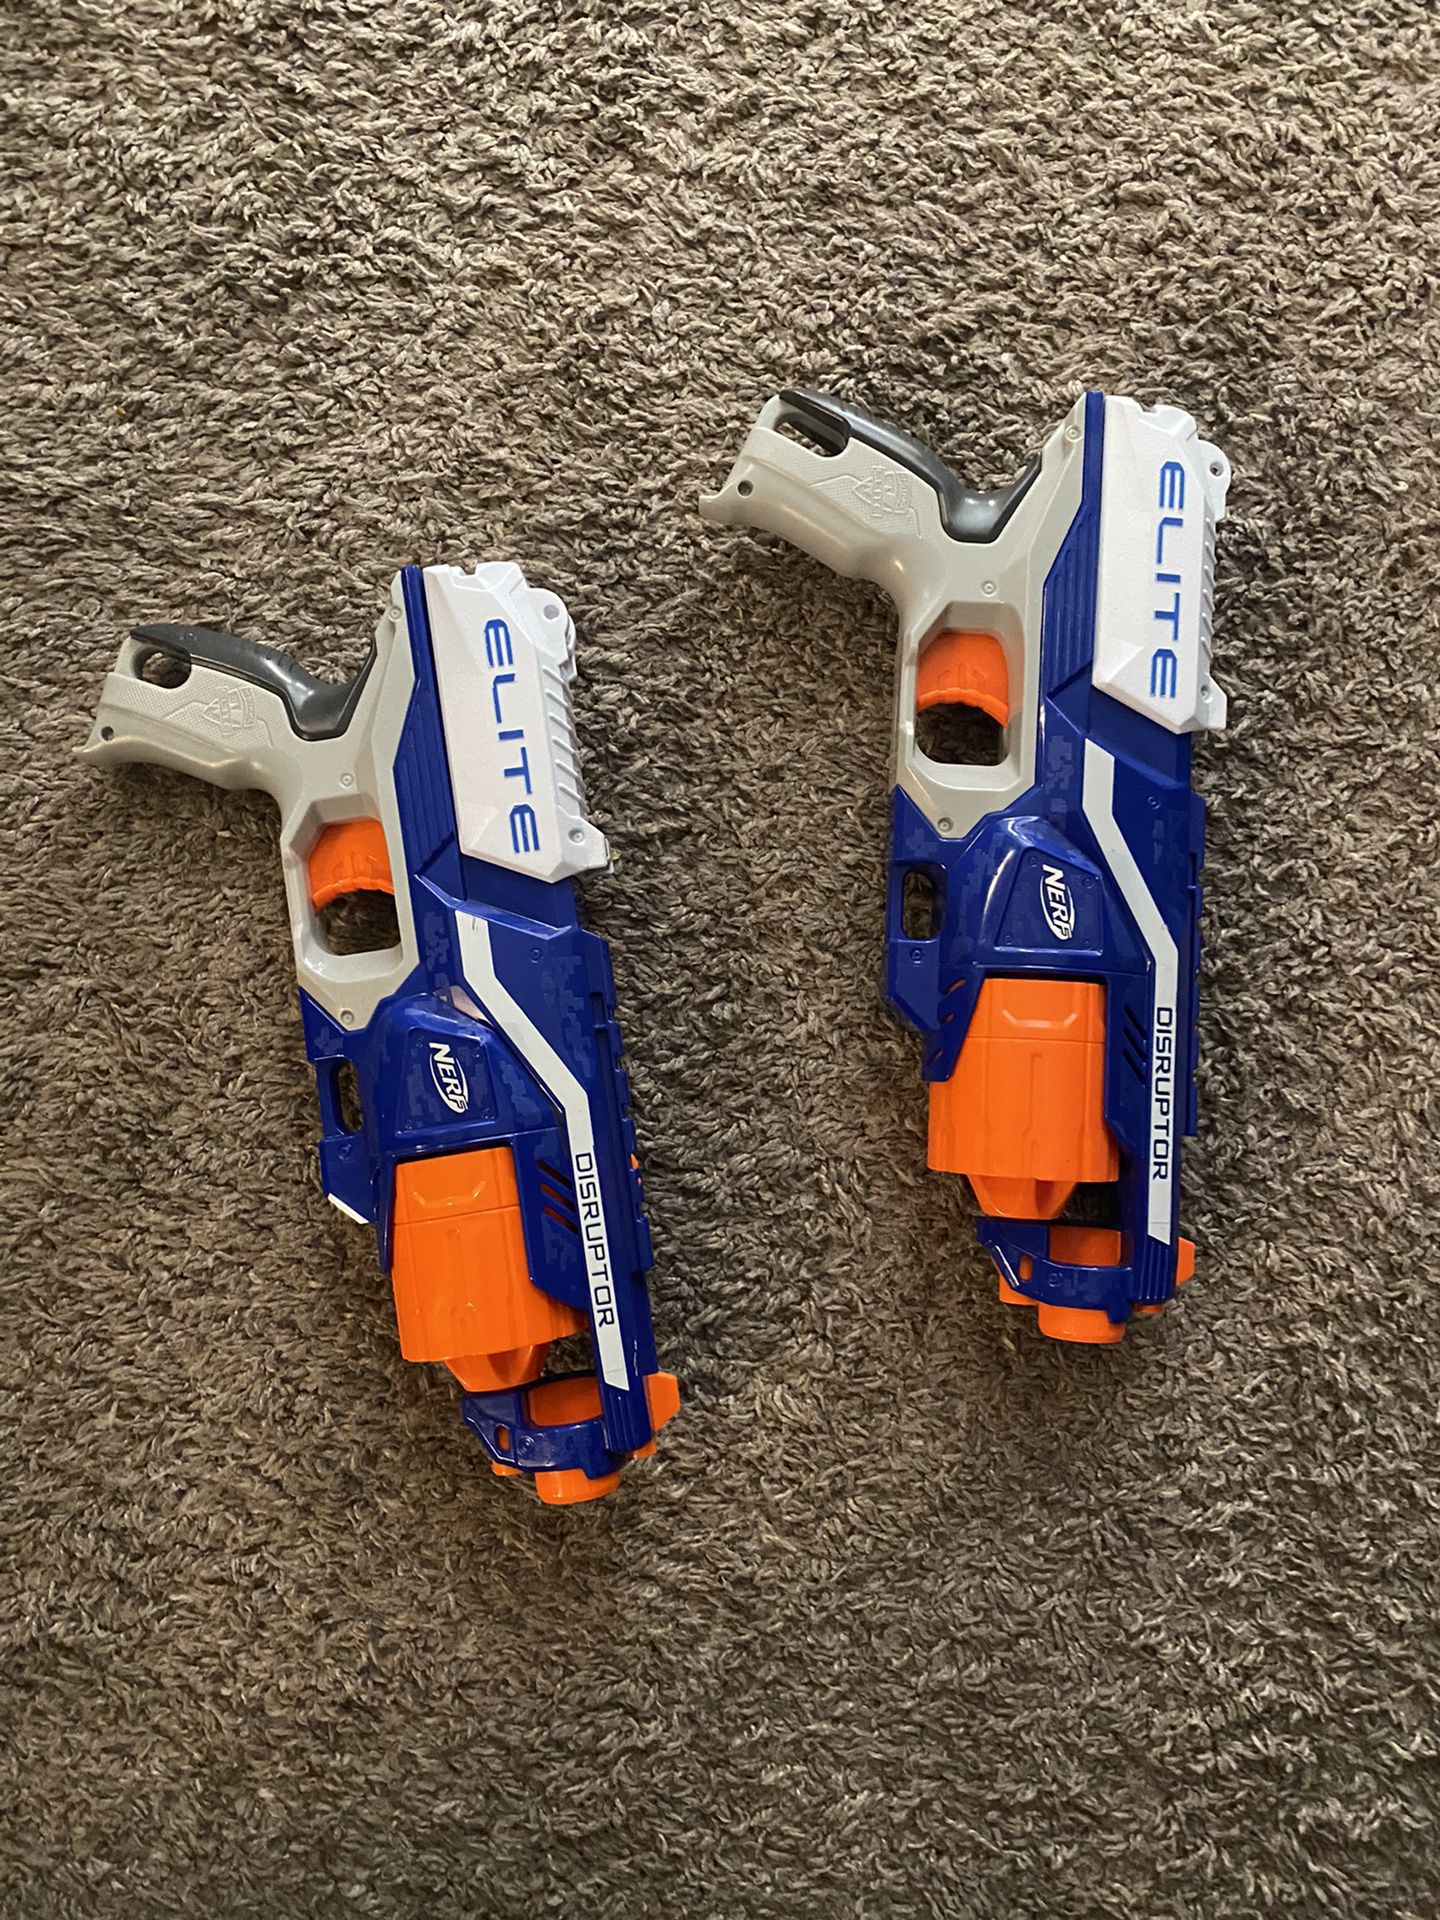 2 Nerf Elite Guns